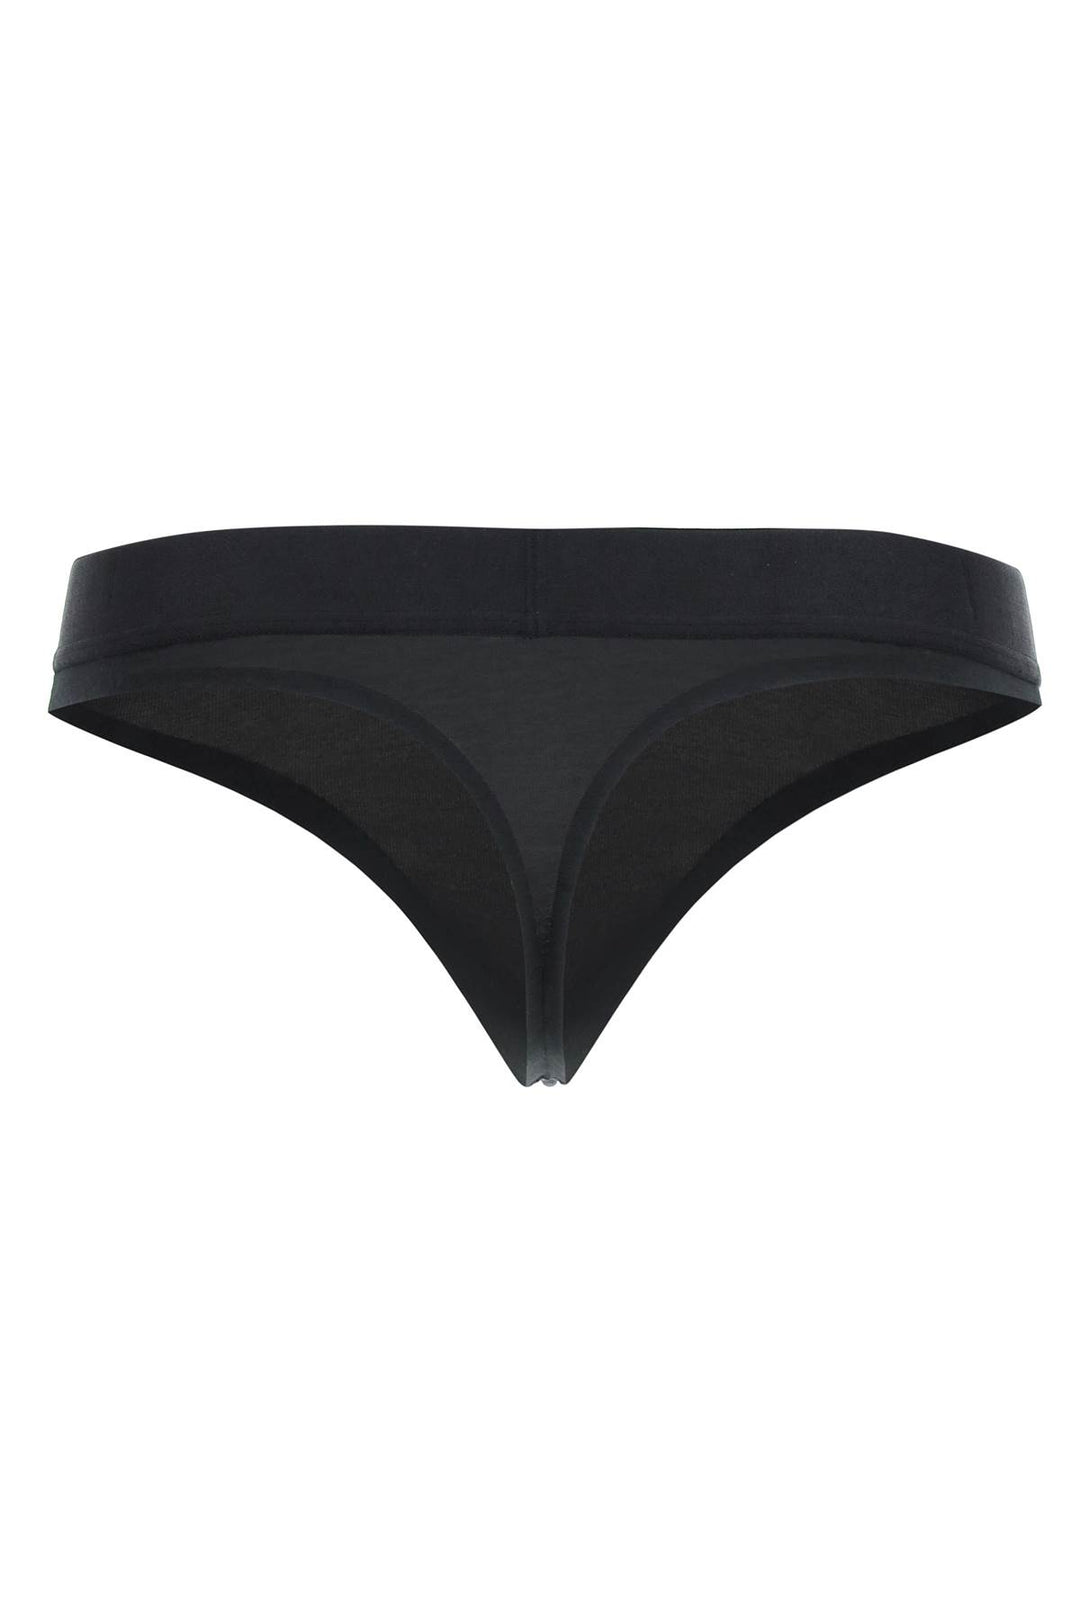 Perizoma Embossed Icon - Calvin Klein Underwear - Donna